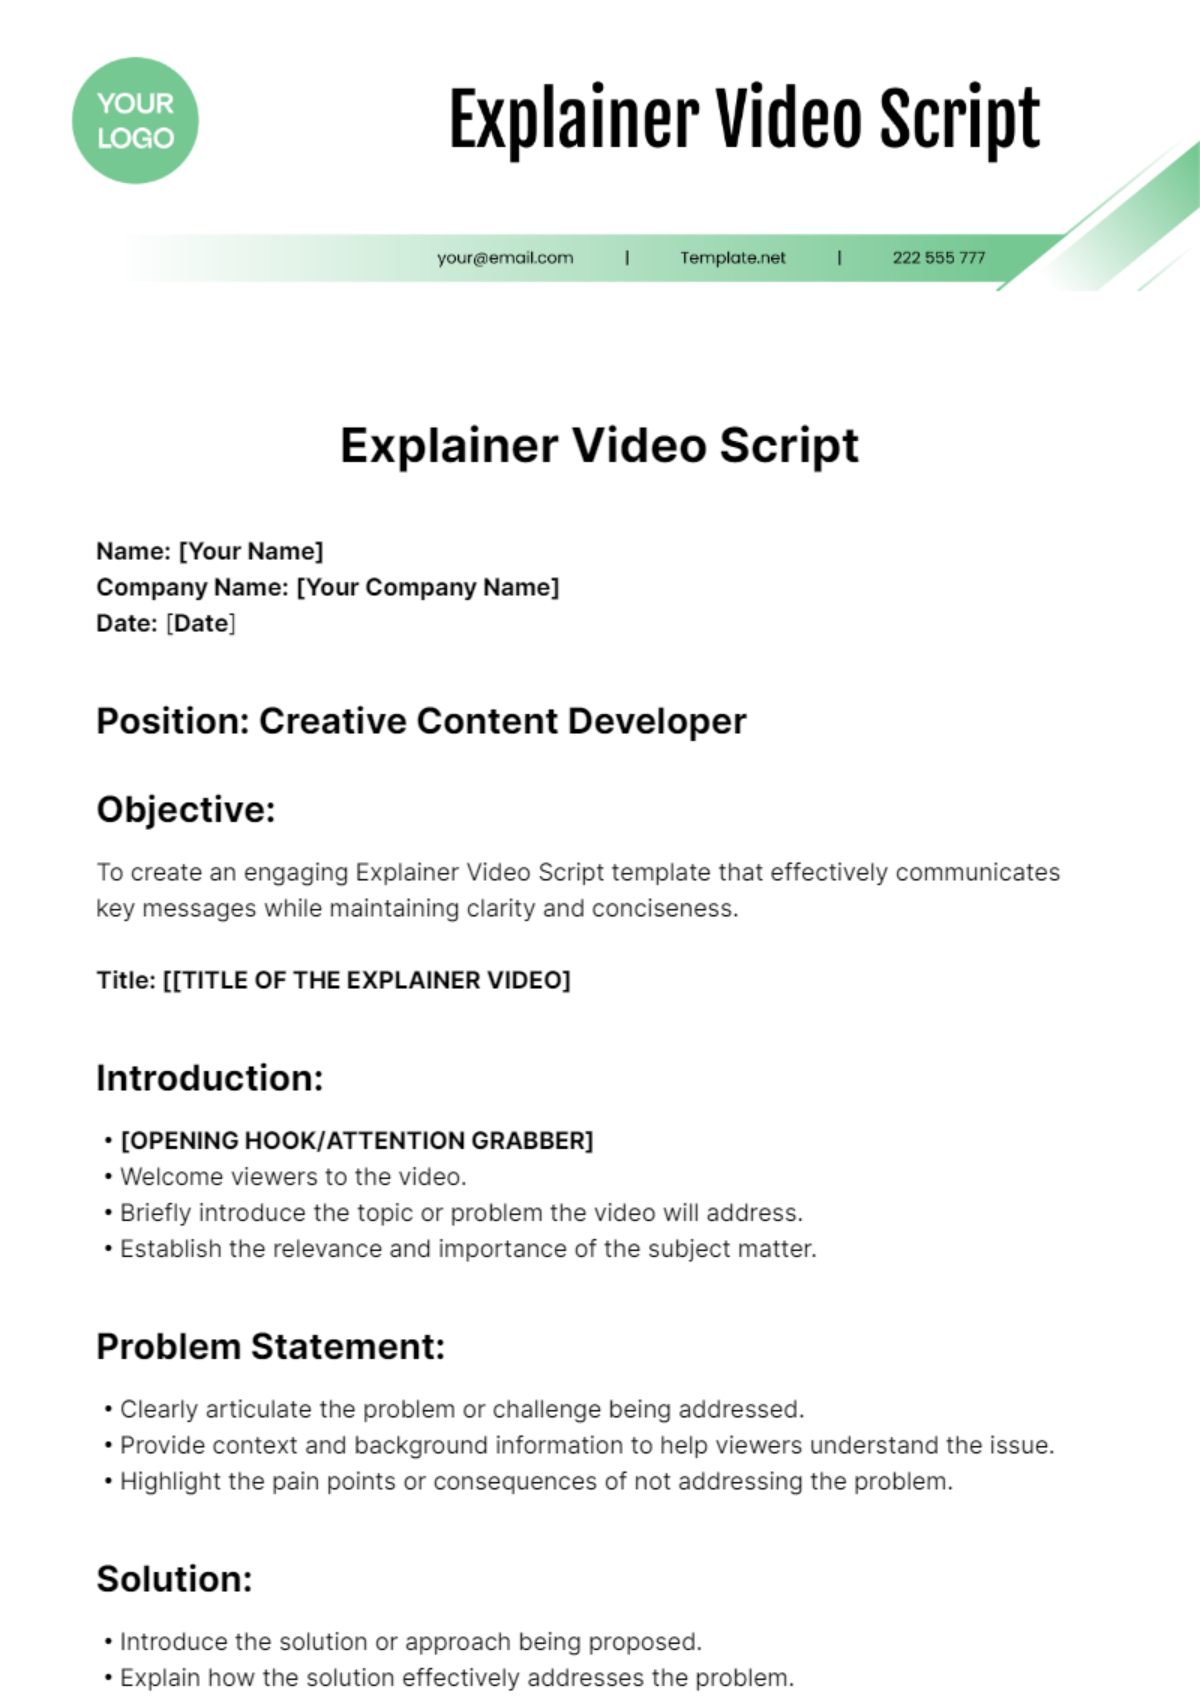 Explainer Video Script template